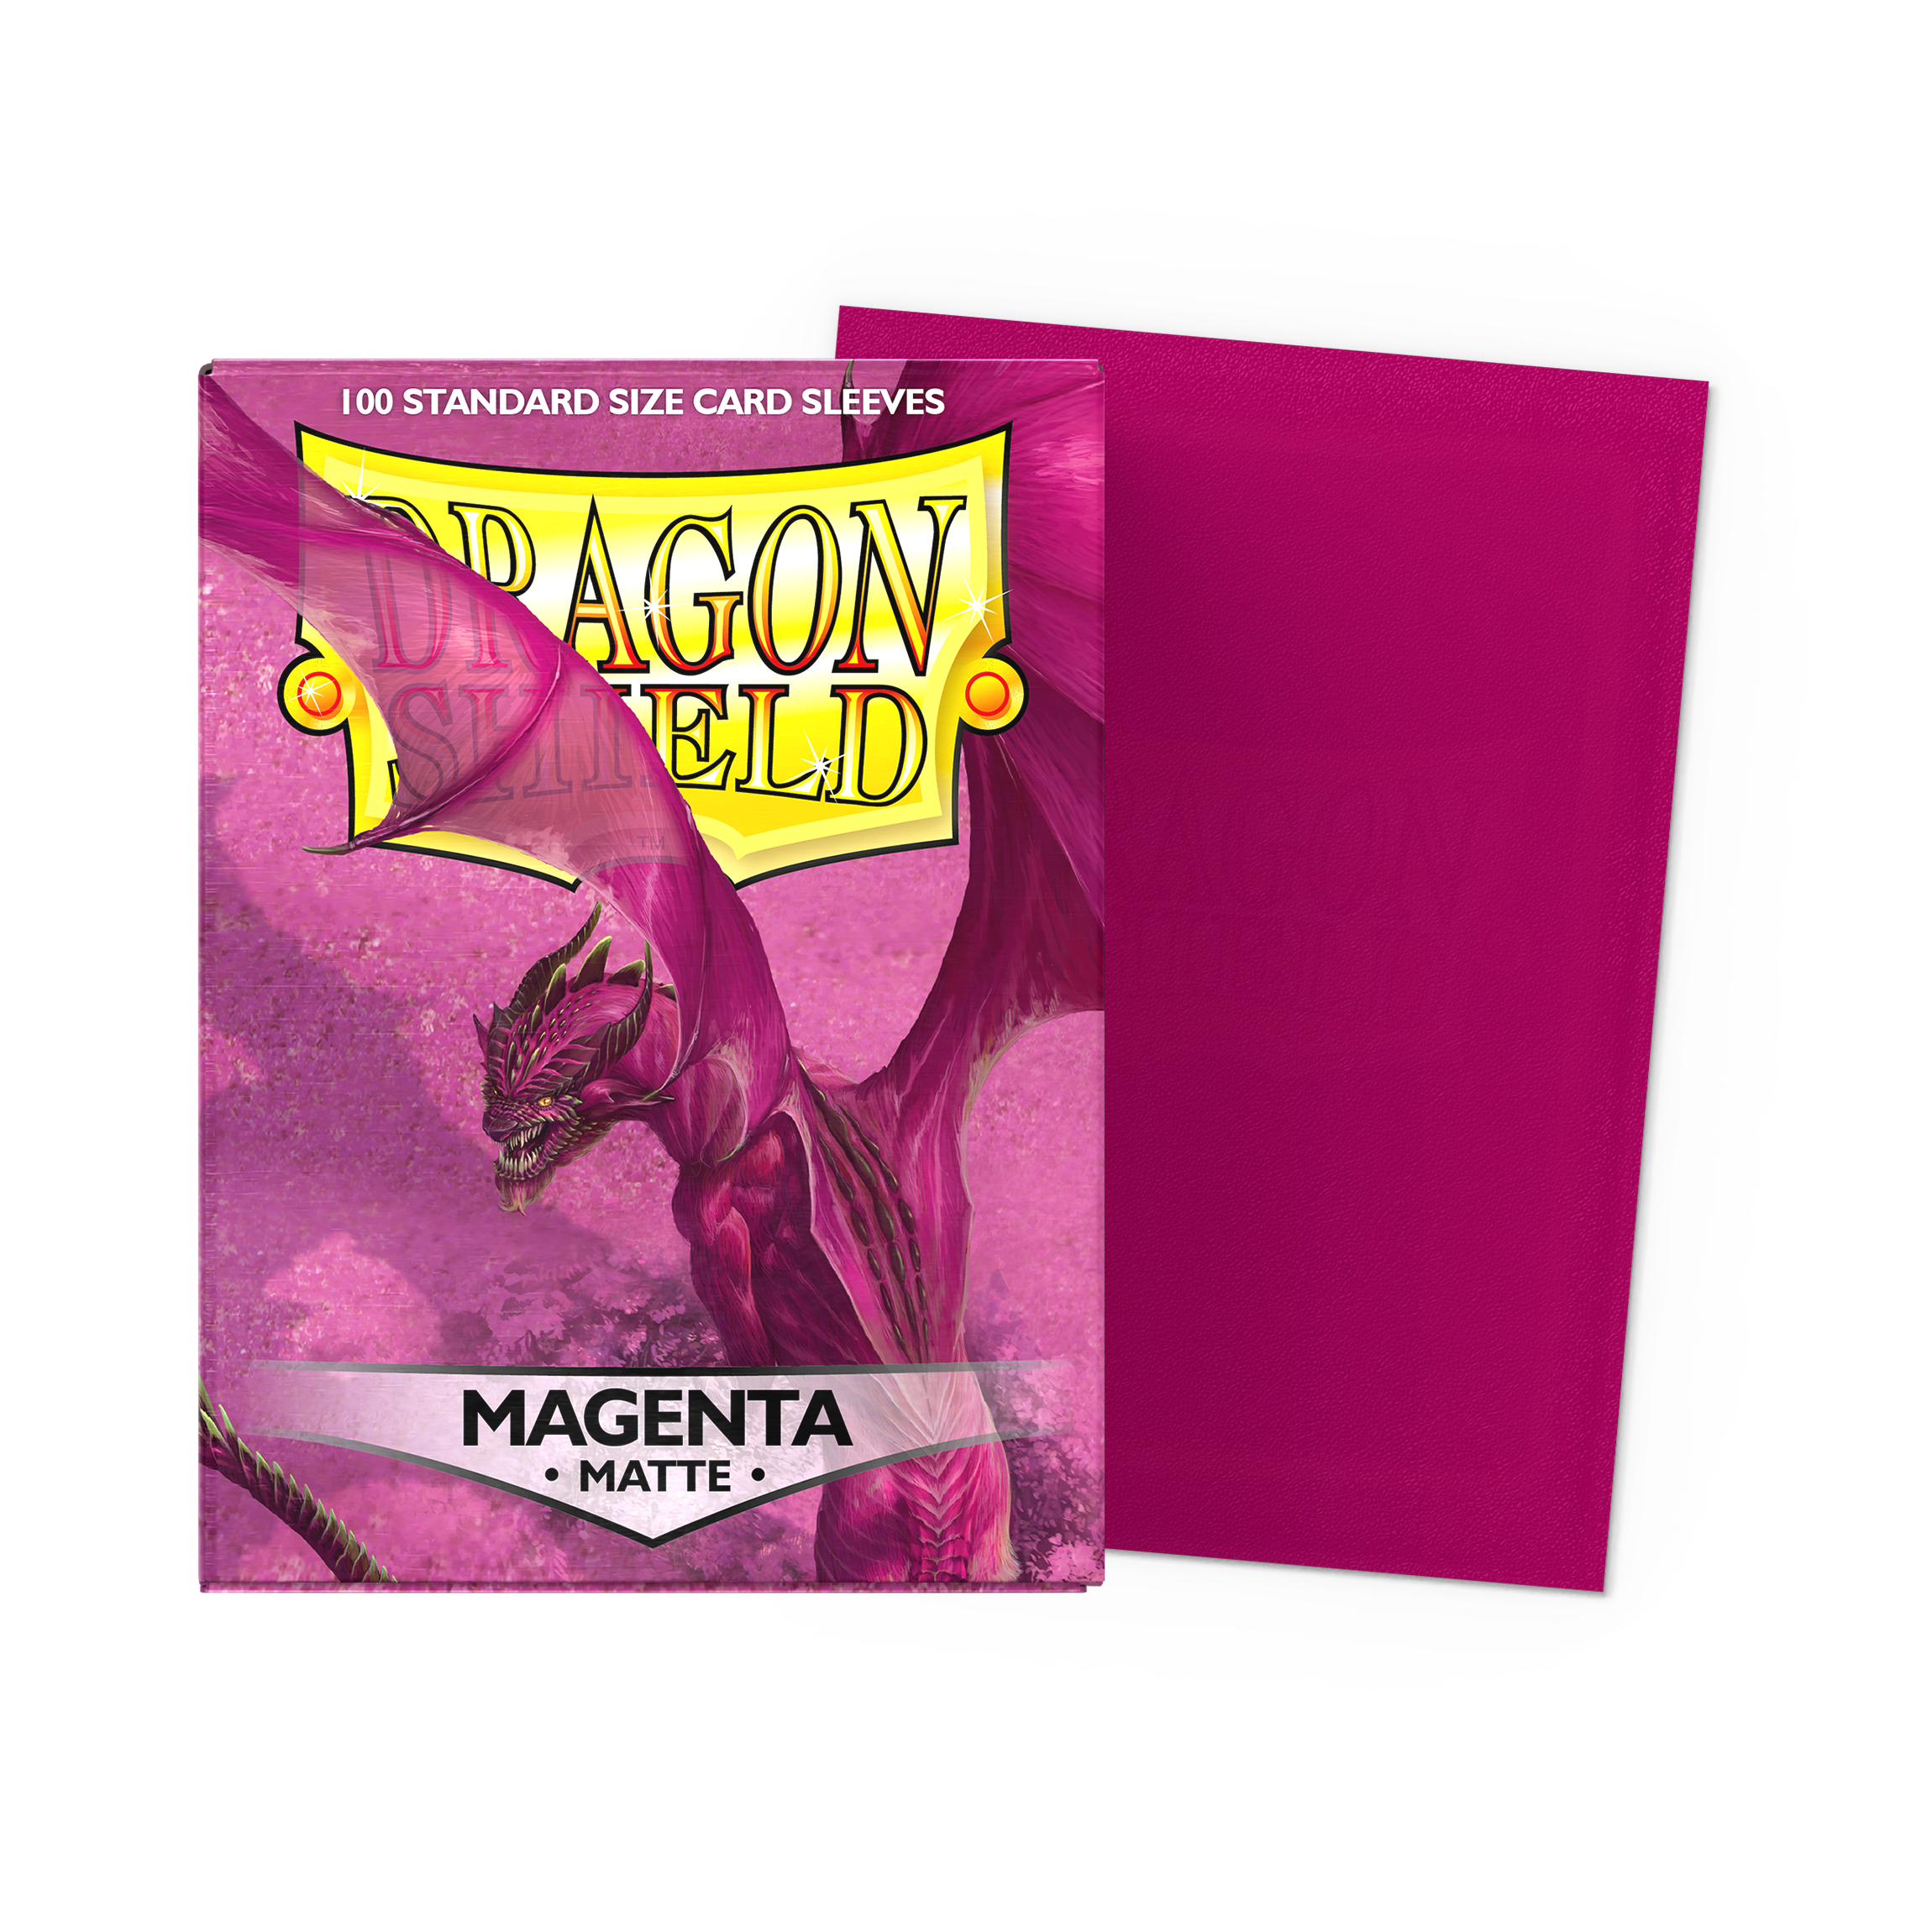 Dragonshield Std Matte Magenta (100)